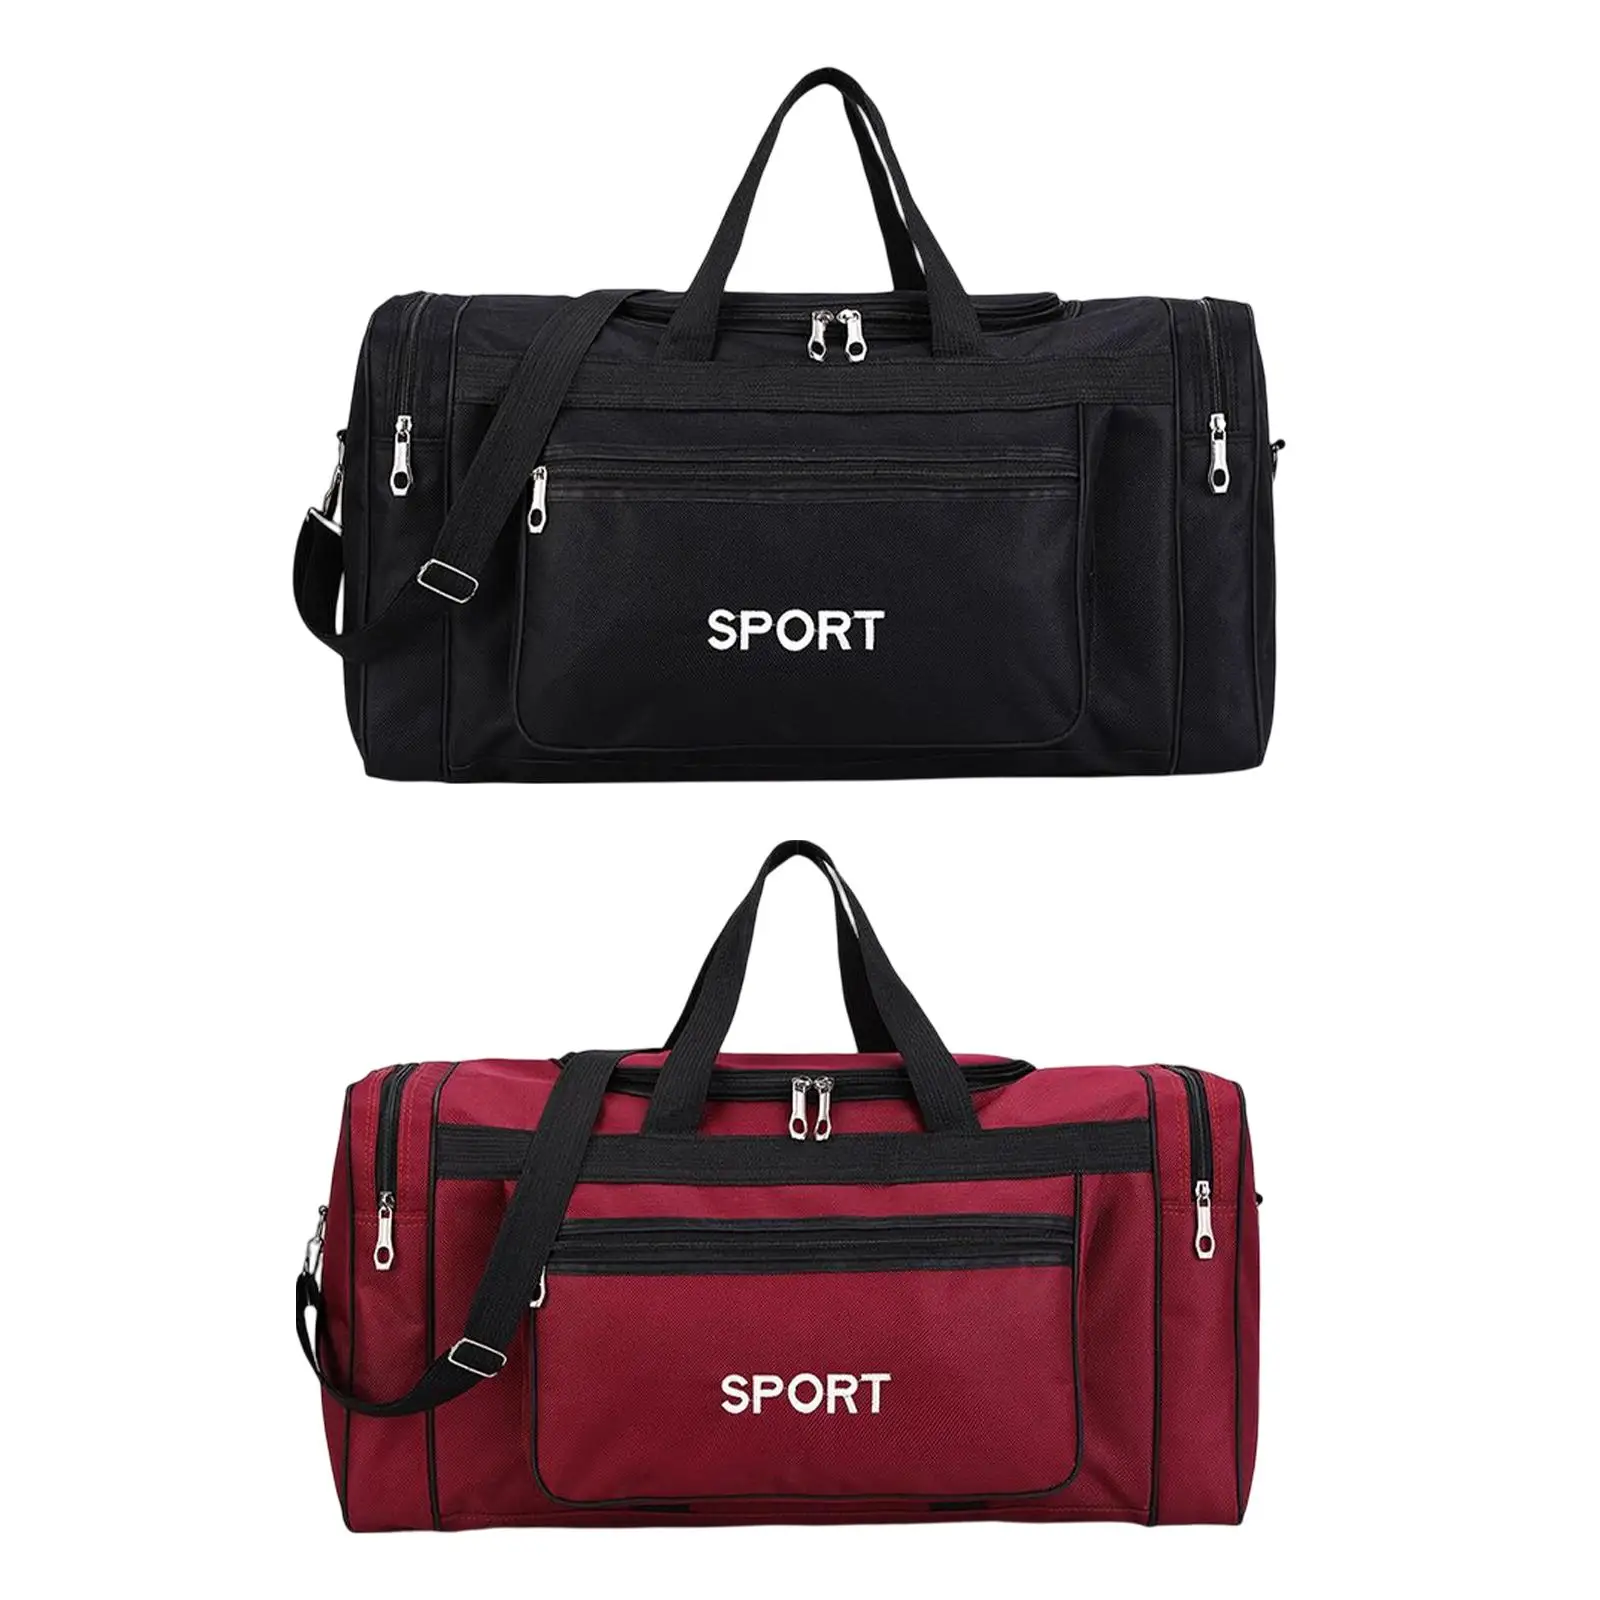 Portable Gym Bag Adjustable Strap Large Lightweight for Camping Workout Yoga